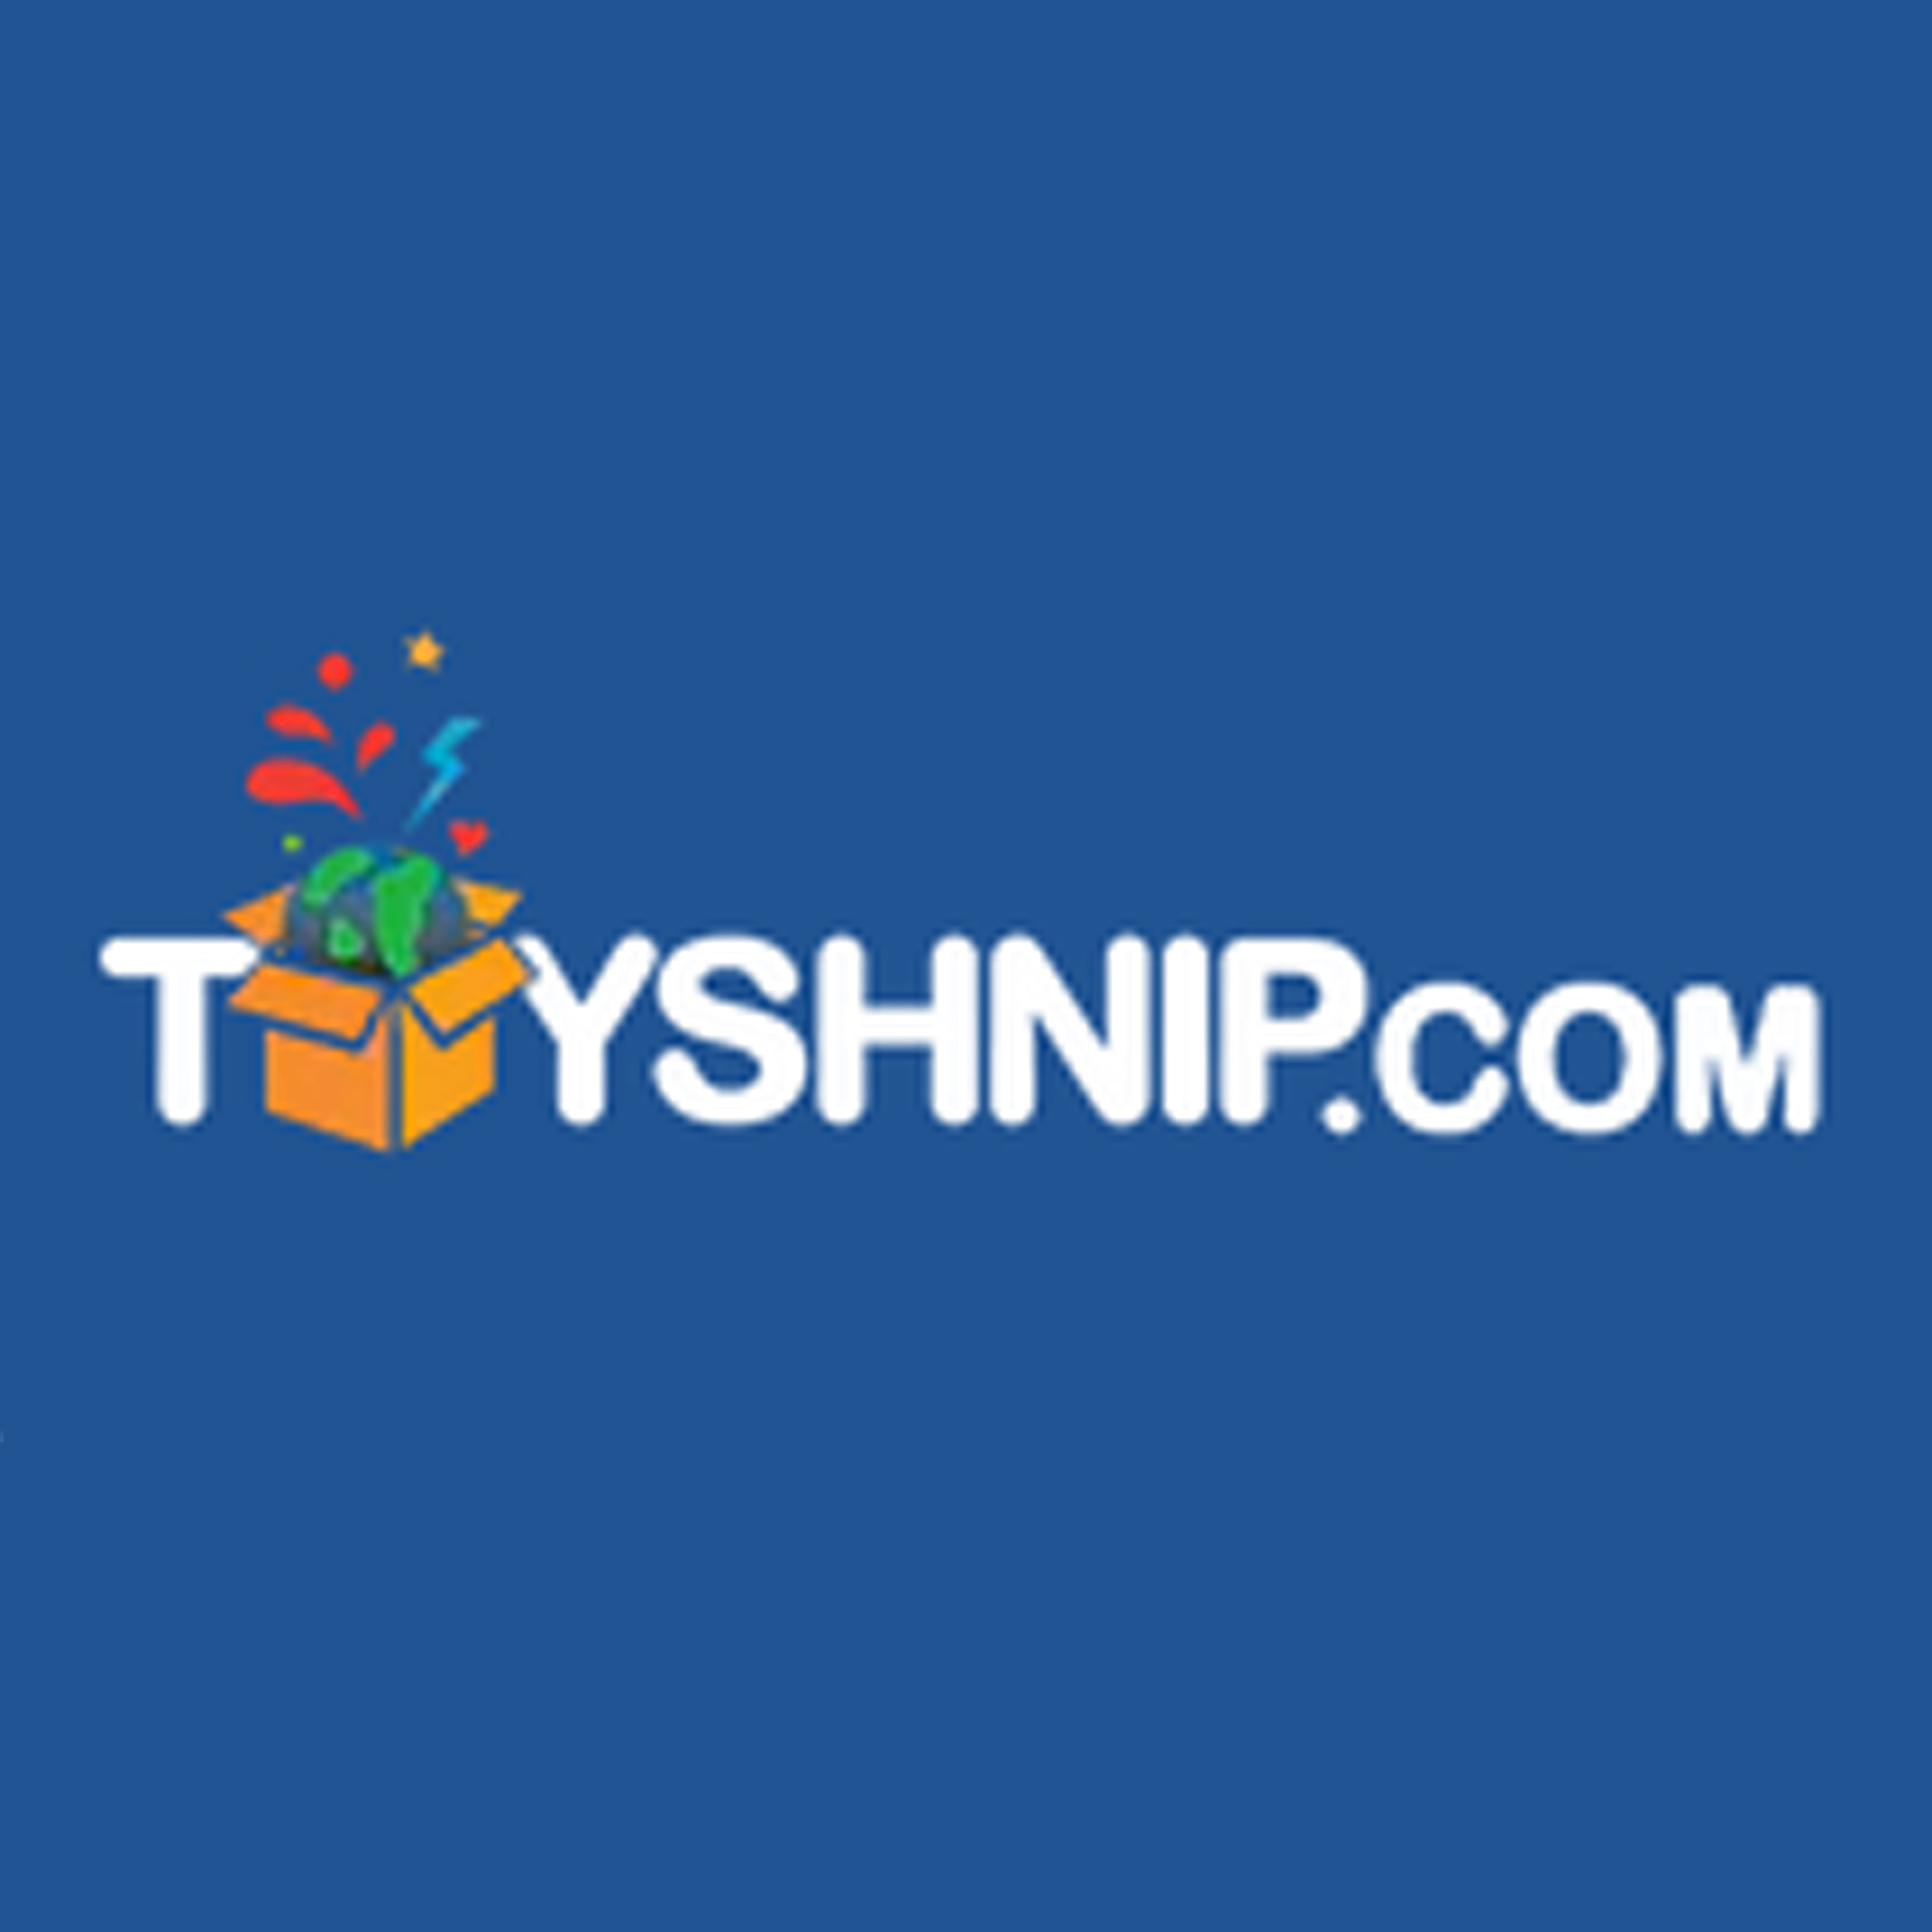 toyshnip.com logo